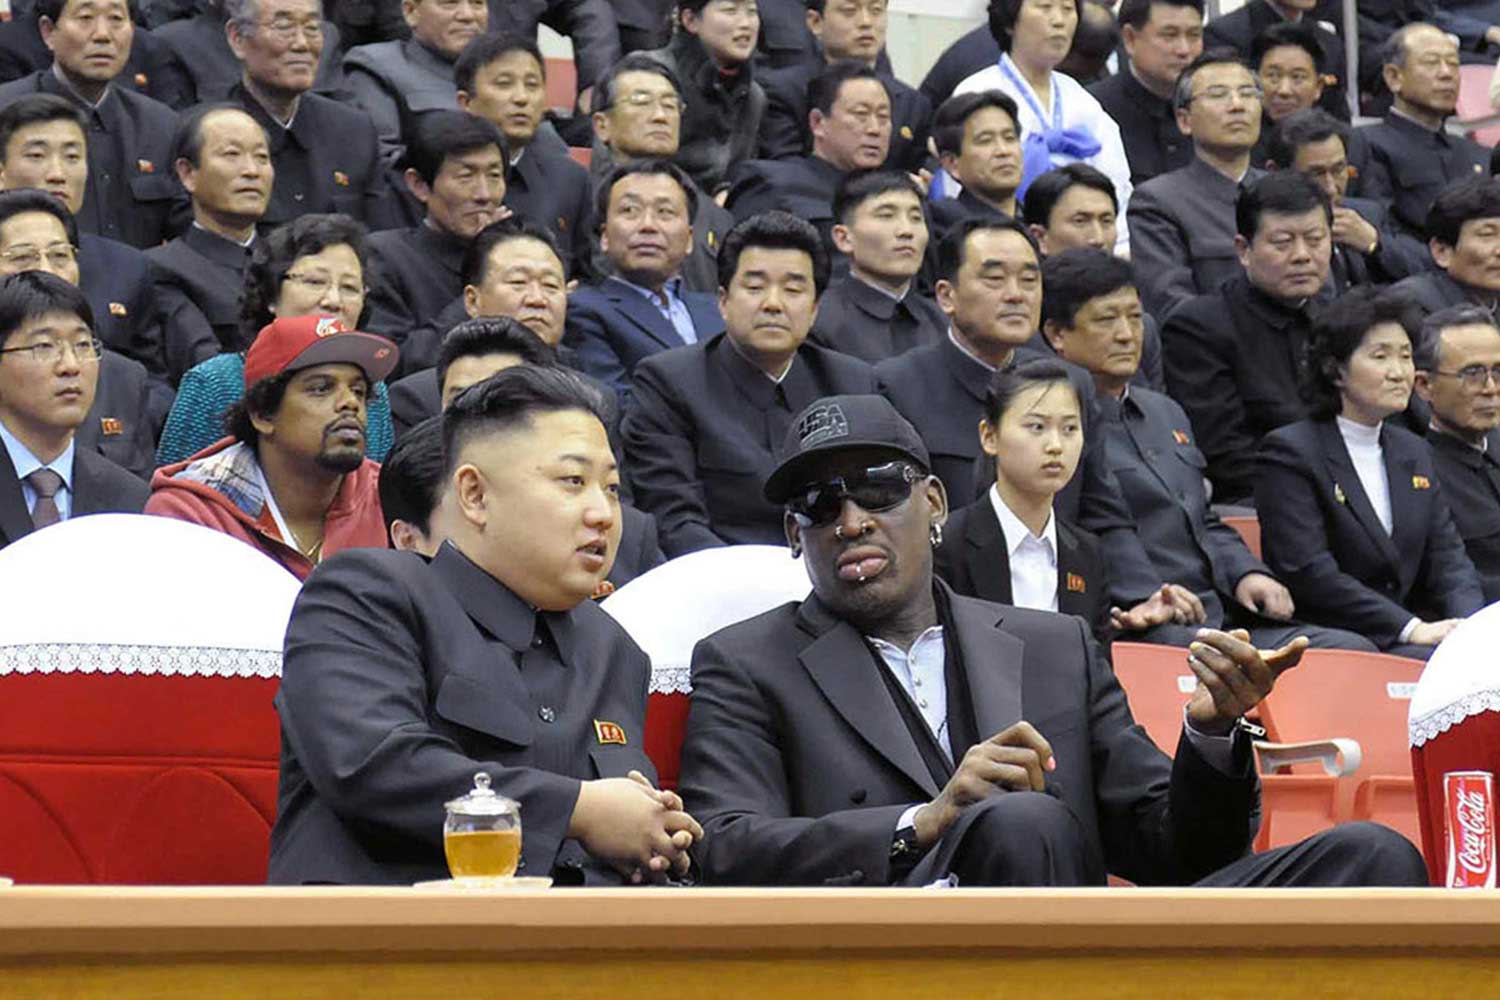 North Korean leader Kim Jong-Un and former NBA star Dennis Rodman speak at a basketball game in Pyongyang on Feb. 28, 2013. (KCNA—AFP/Getty Images)